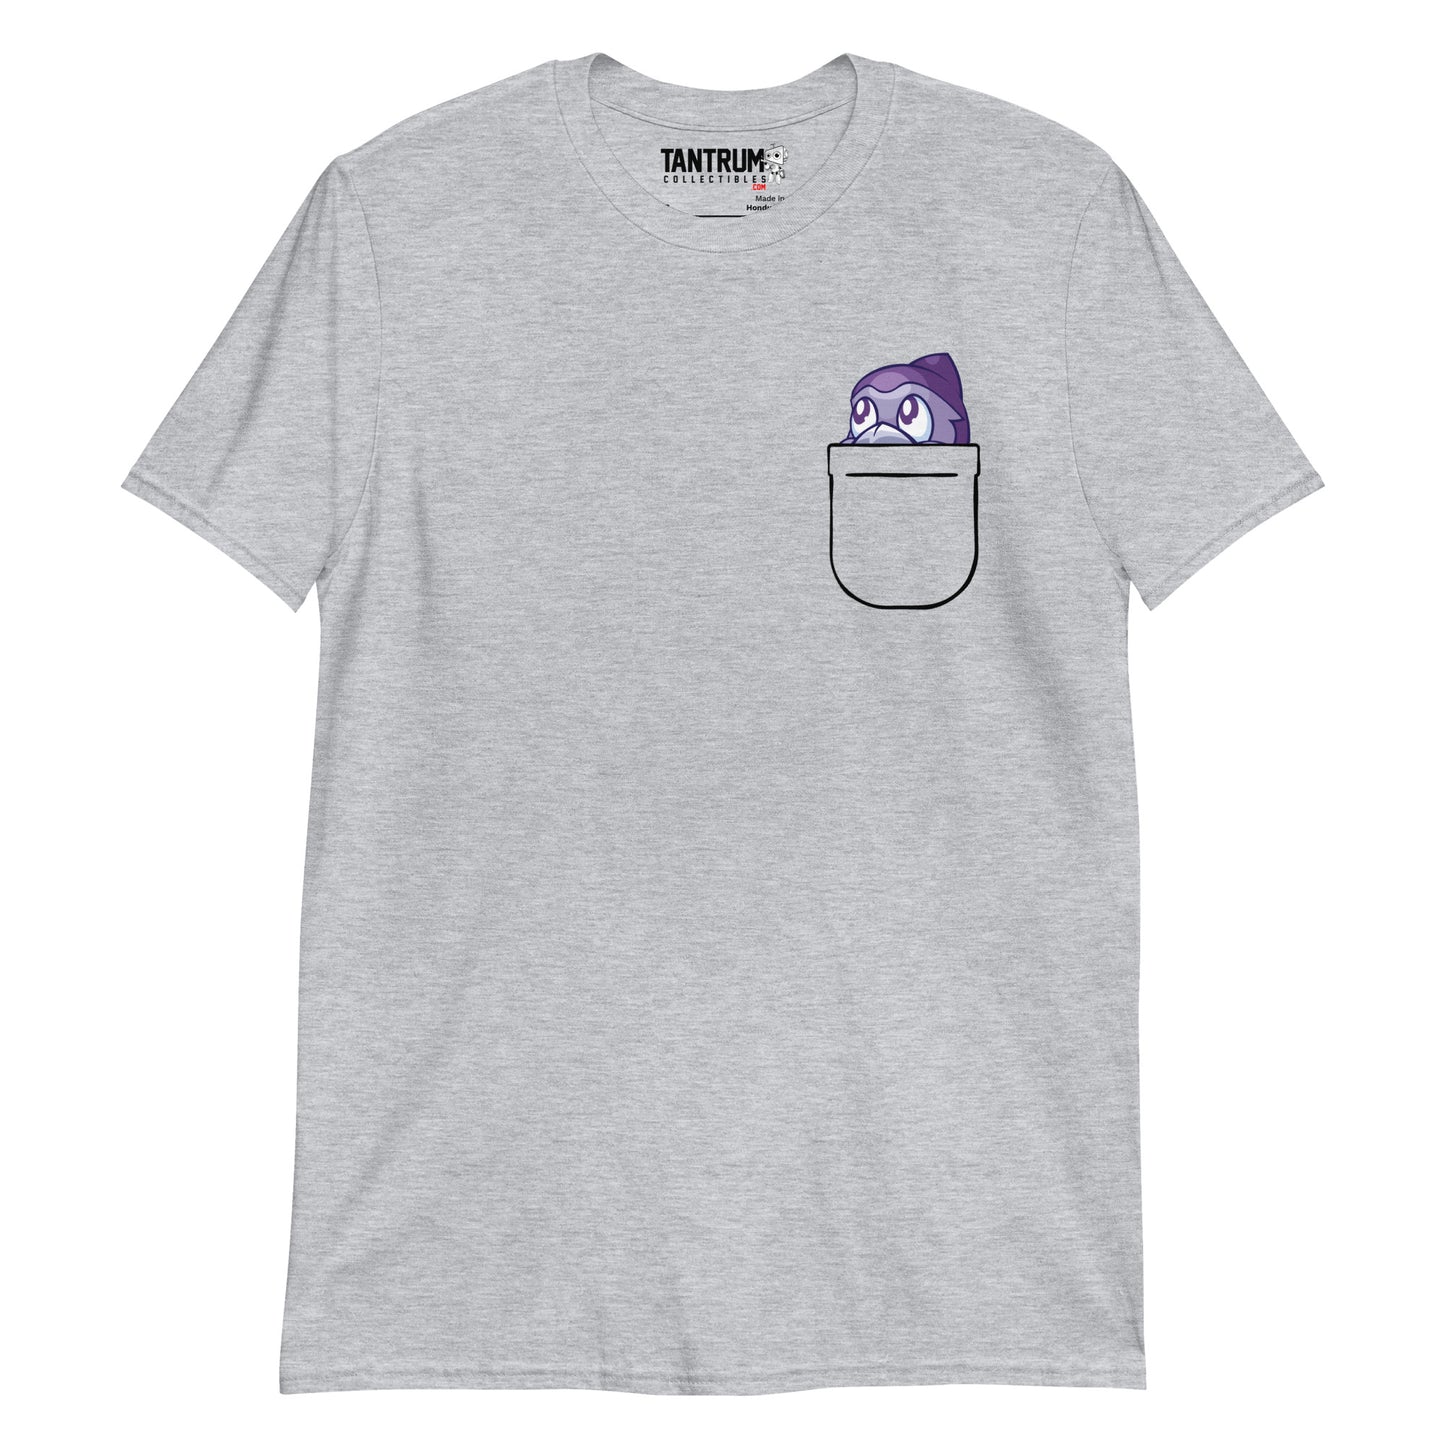 Dangers - Unisex T-Shirt - Printed Pocket (Series 1) Lurk (Steamer Purchase)